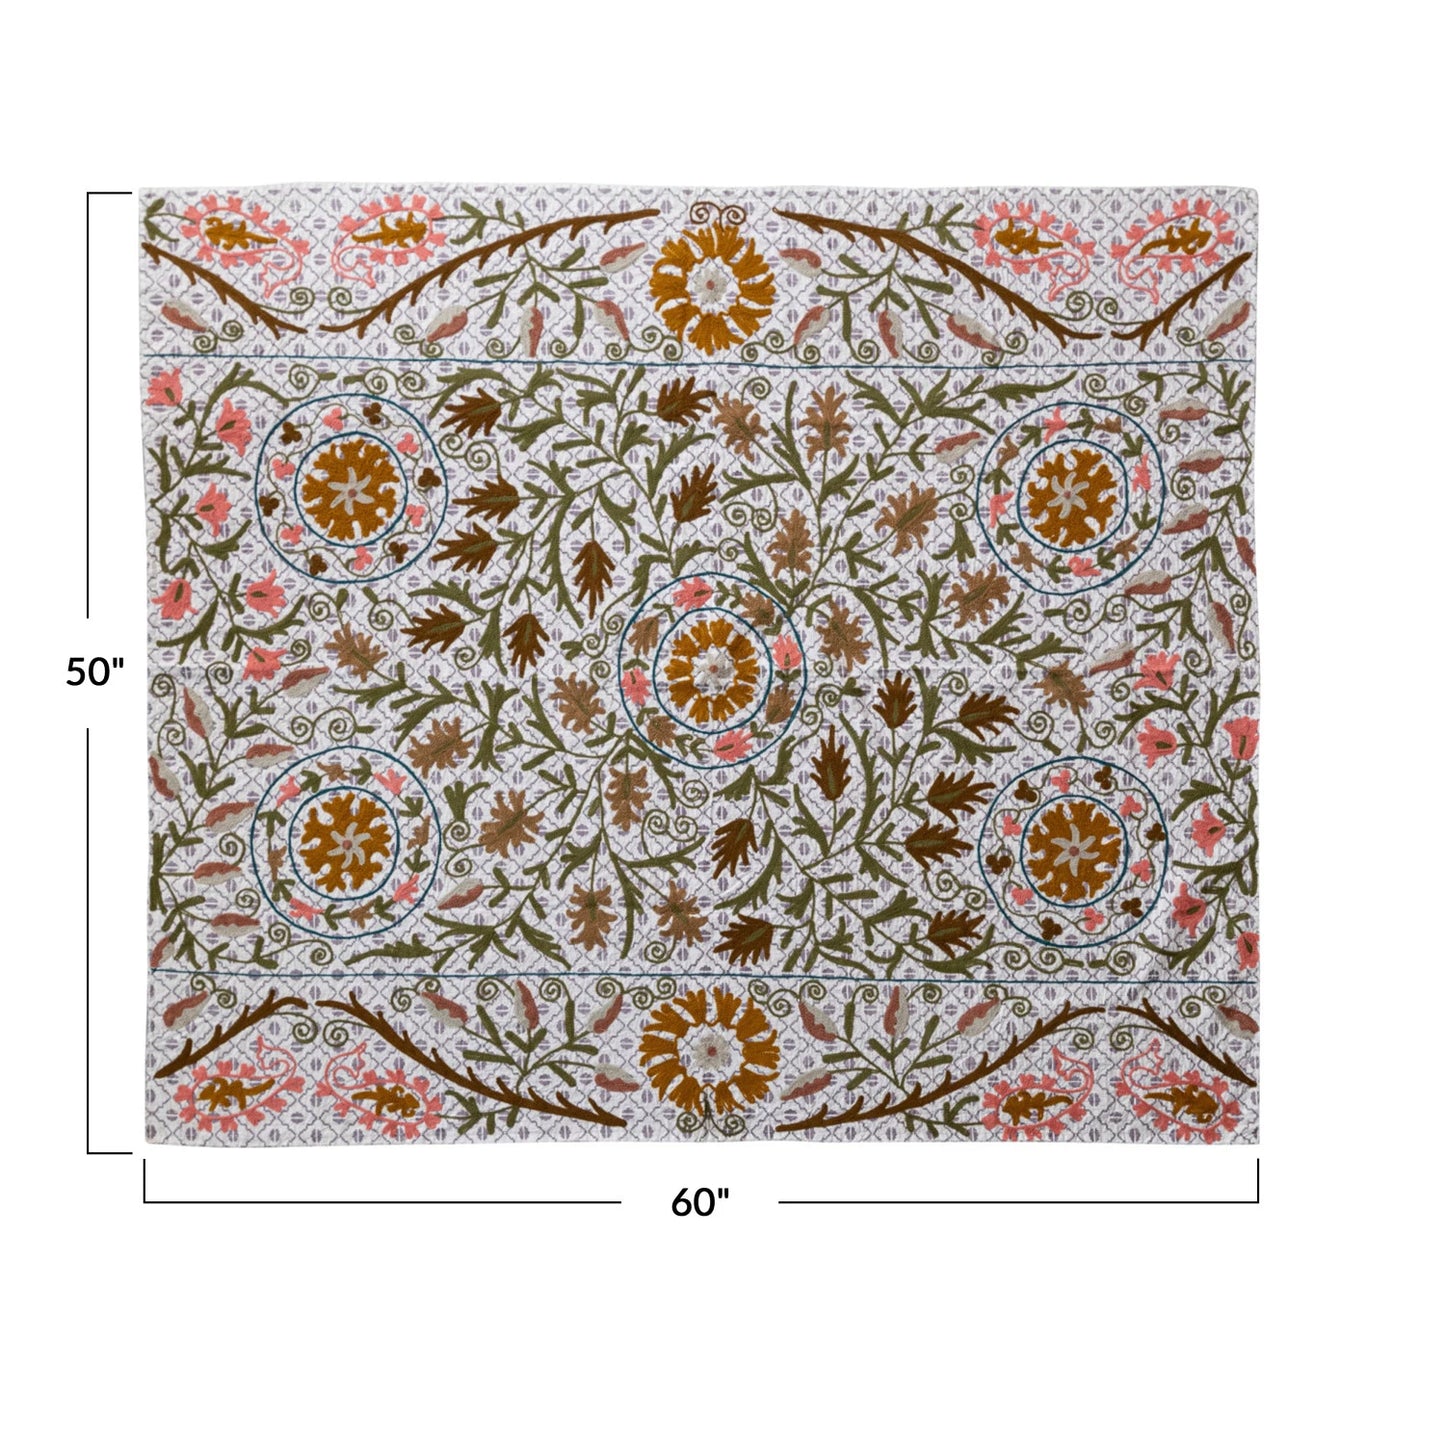 Chessa Stonewashed Cotton Printed Voile Throw w/ Hand-Embroidered Kantha Stitch